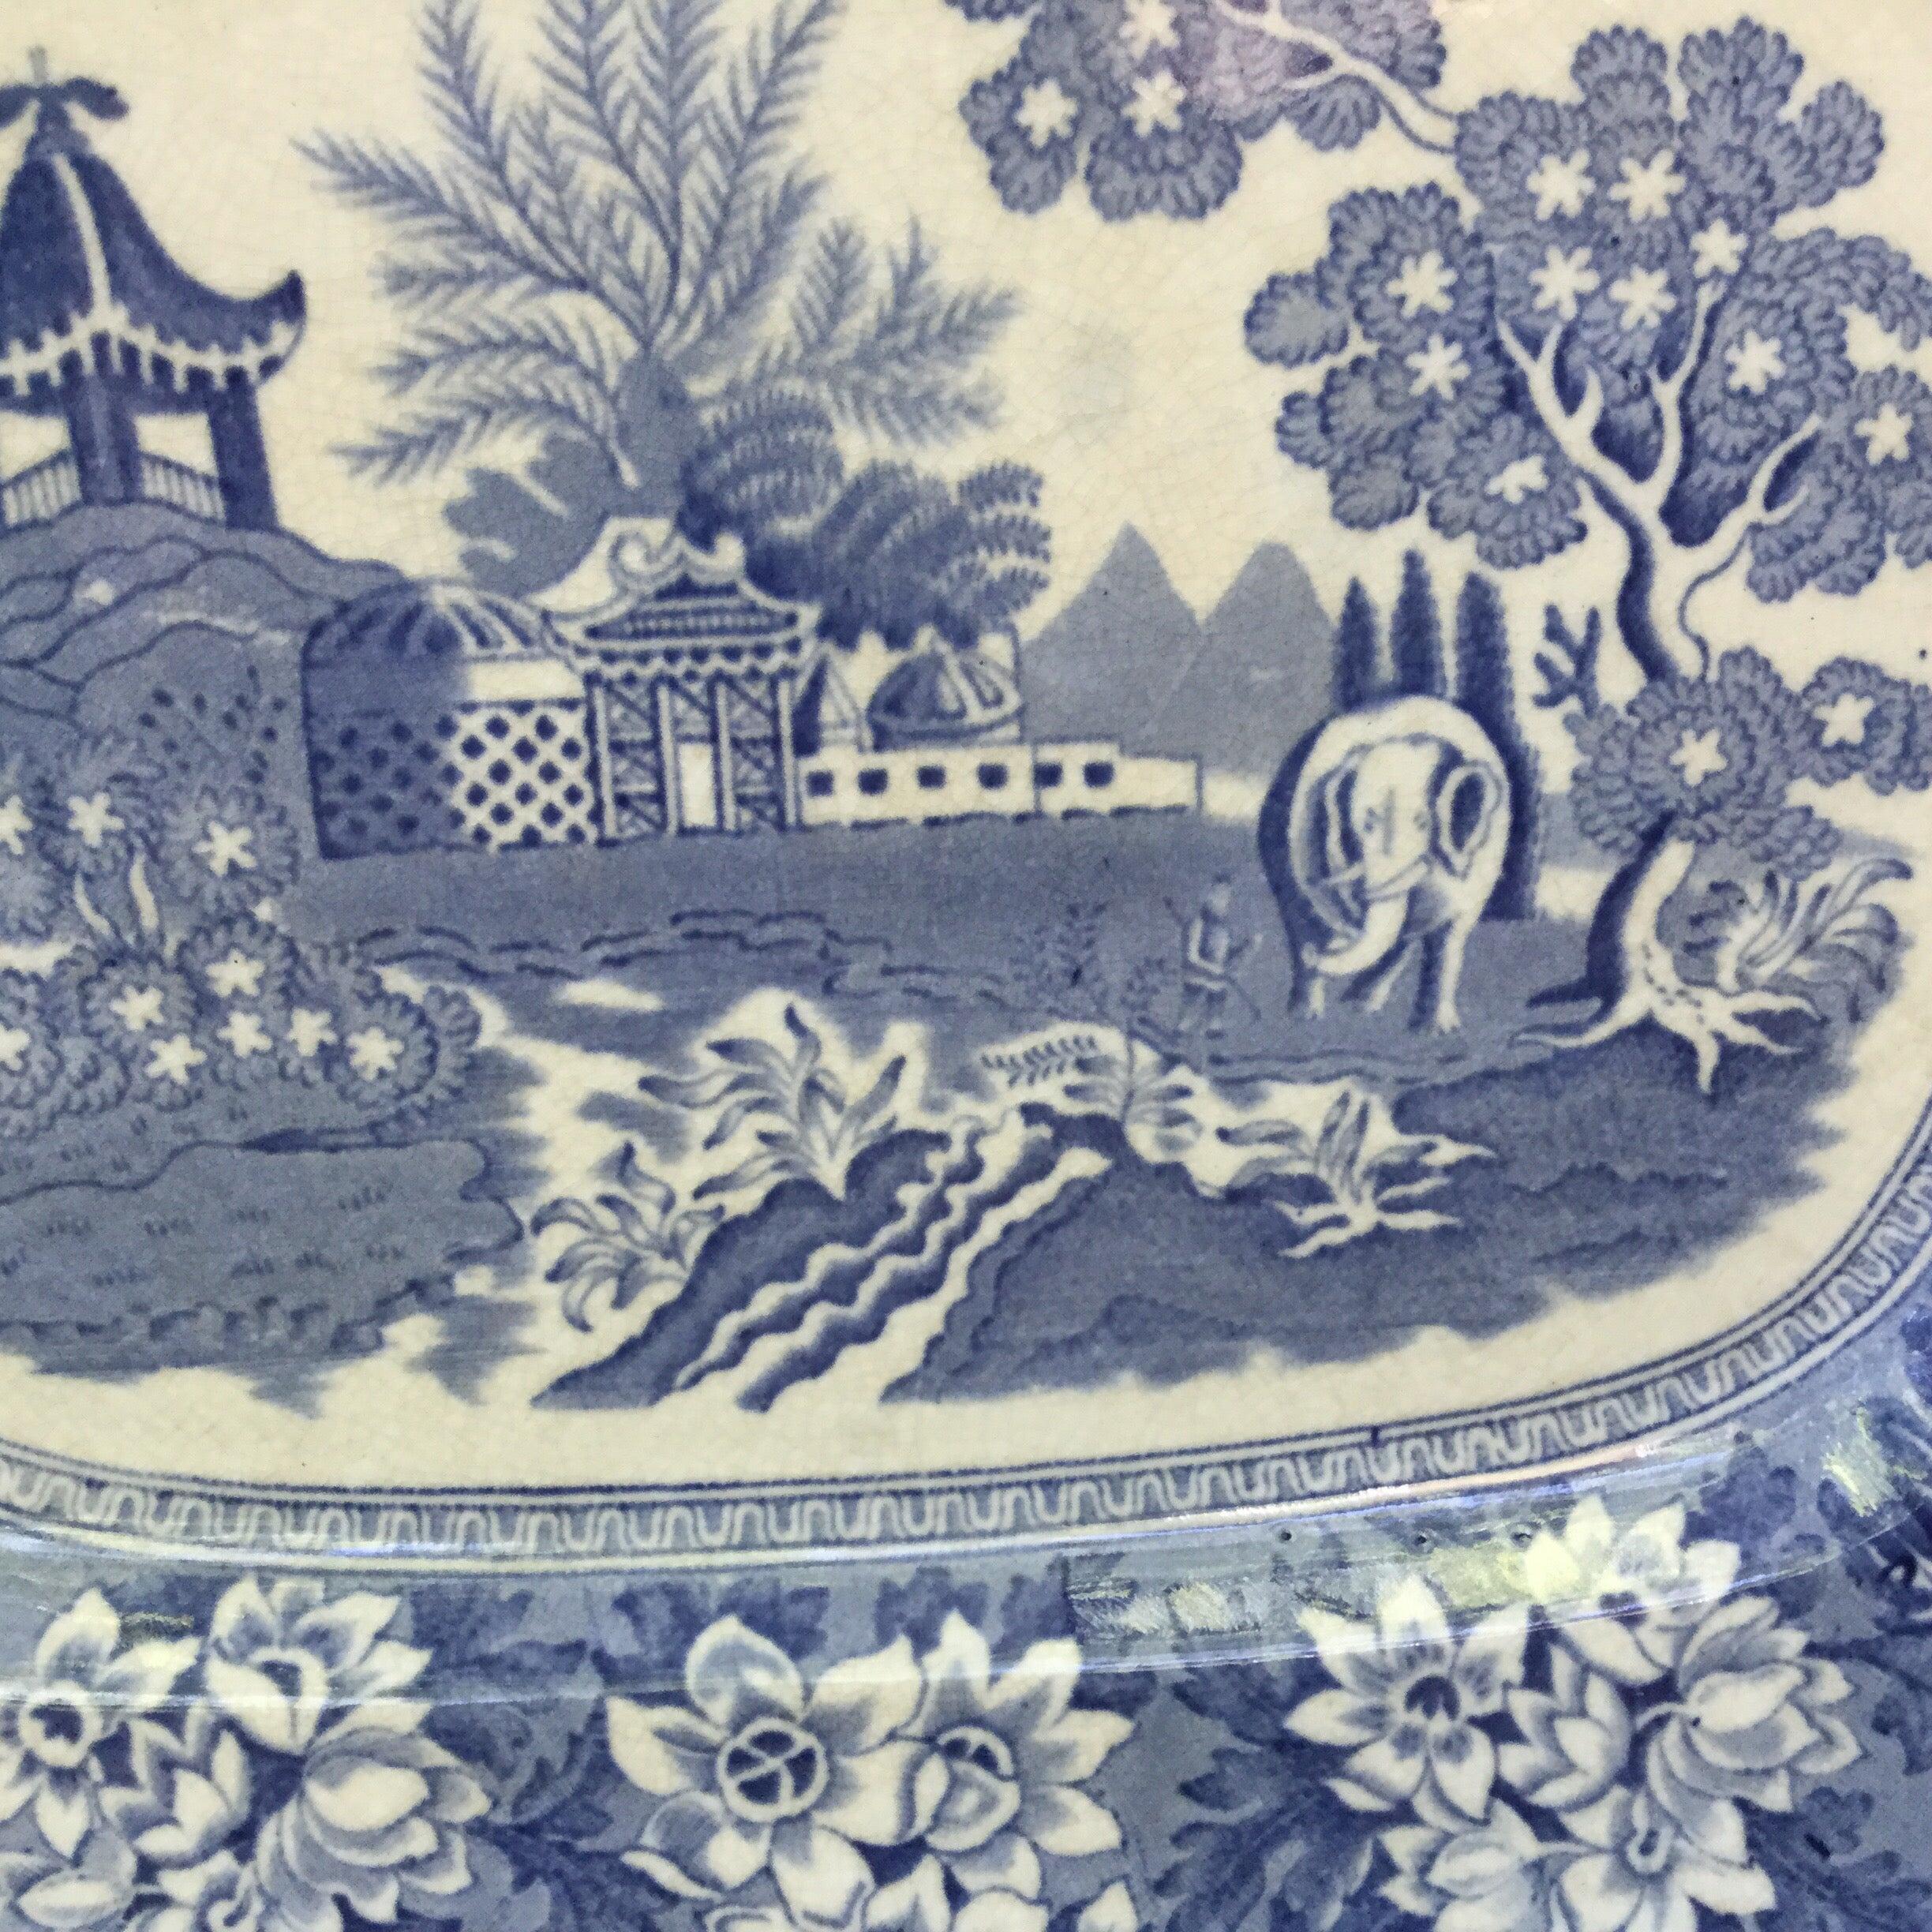 Late 19th Century Set of Three Blue and White Plates Elephant Chinoiserie Pagoda Burslem